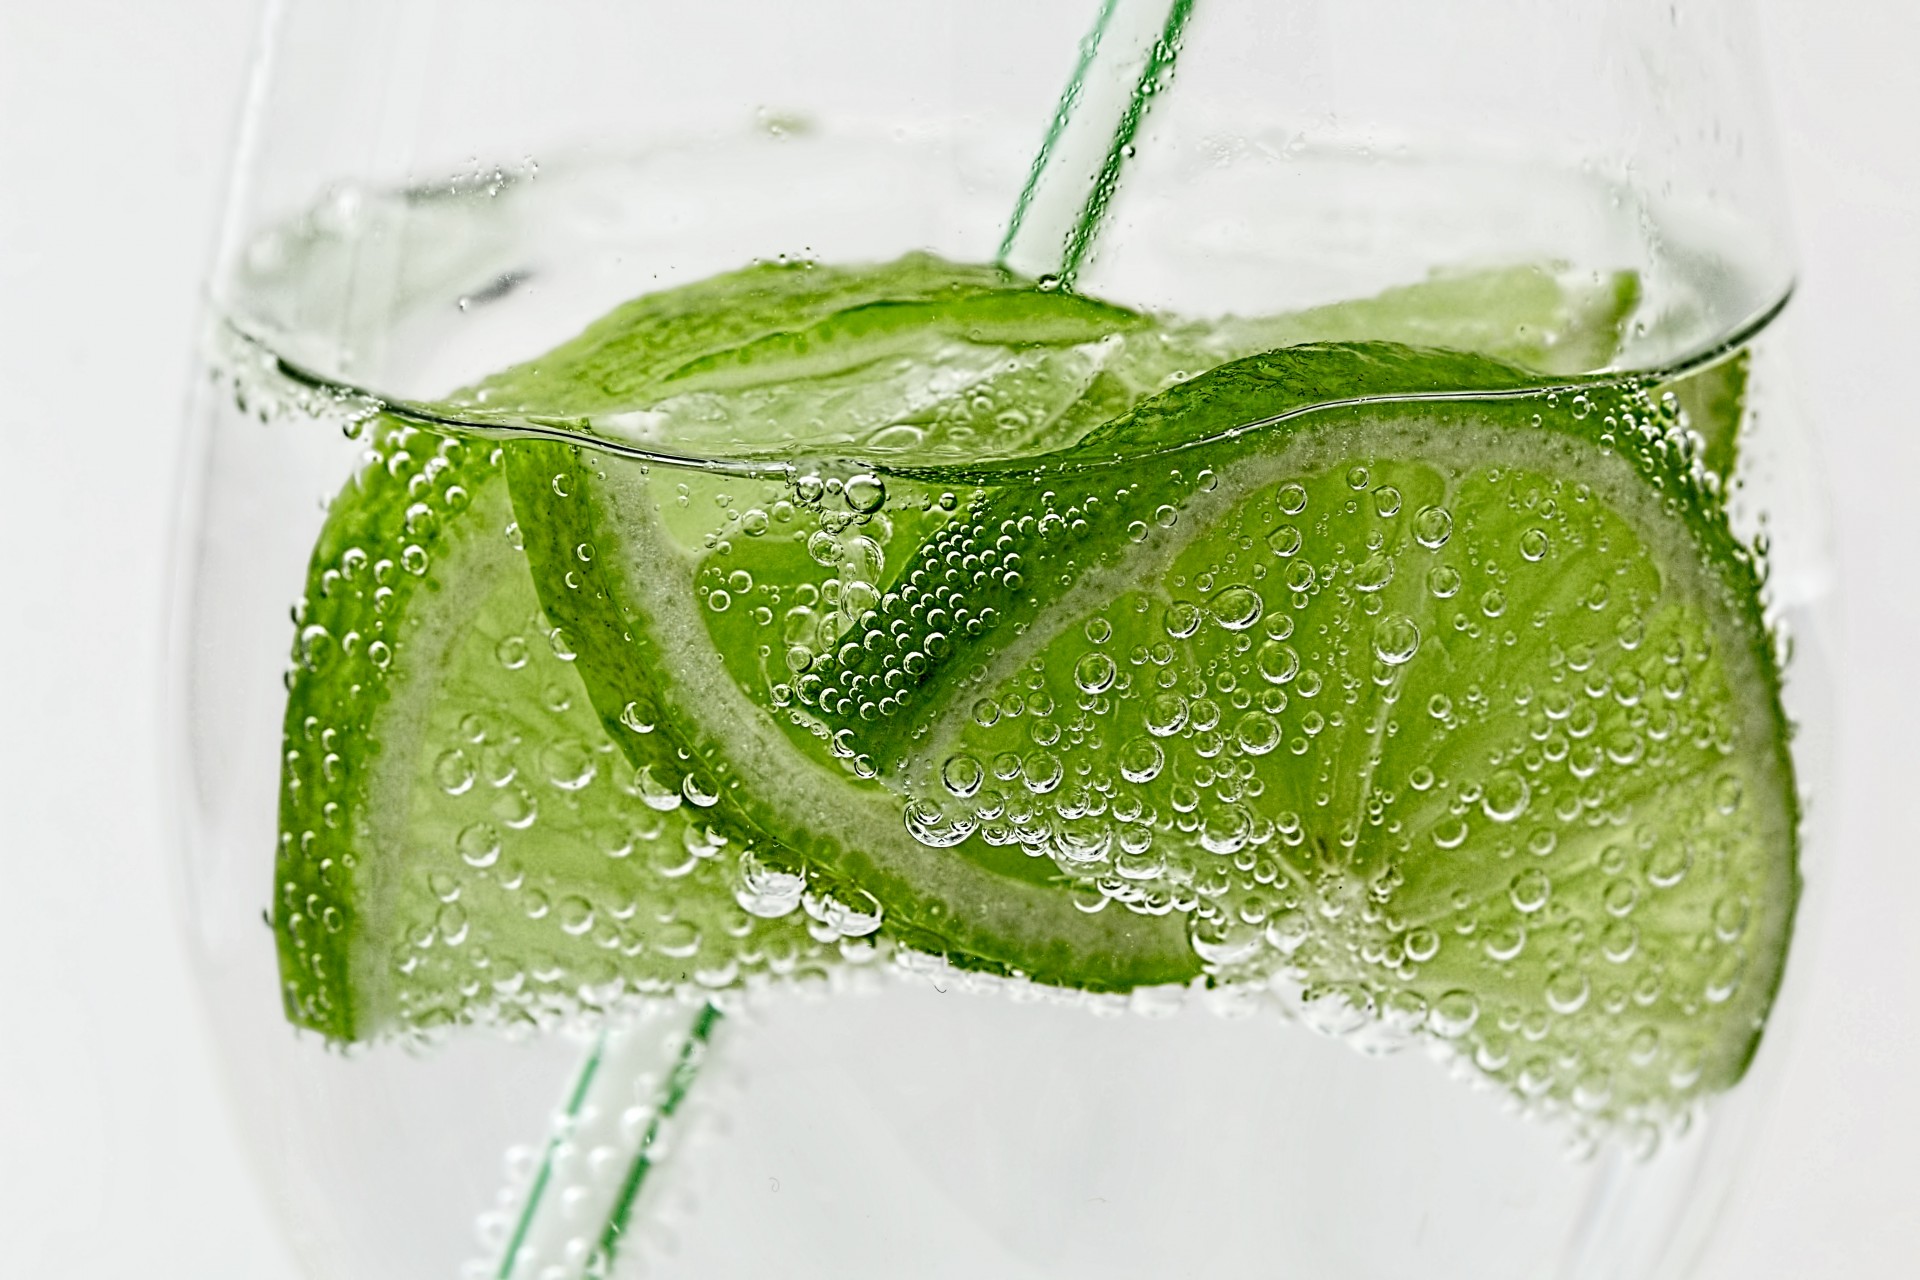 Sliced limes in a glass of club soda